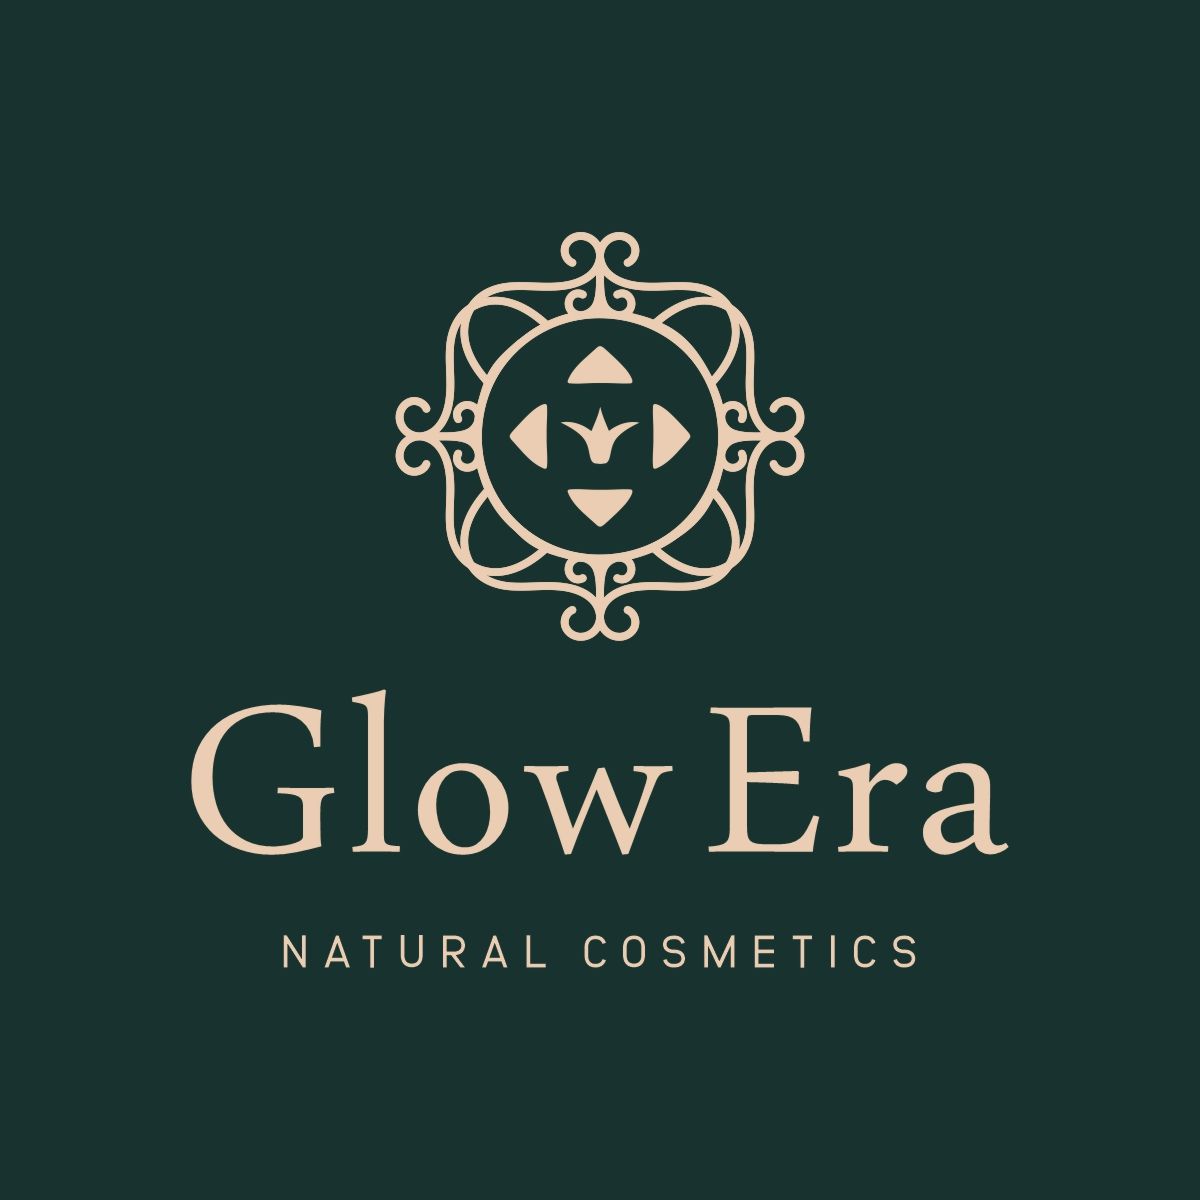 Glow Era Natural Cosmetics logo